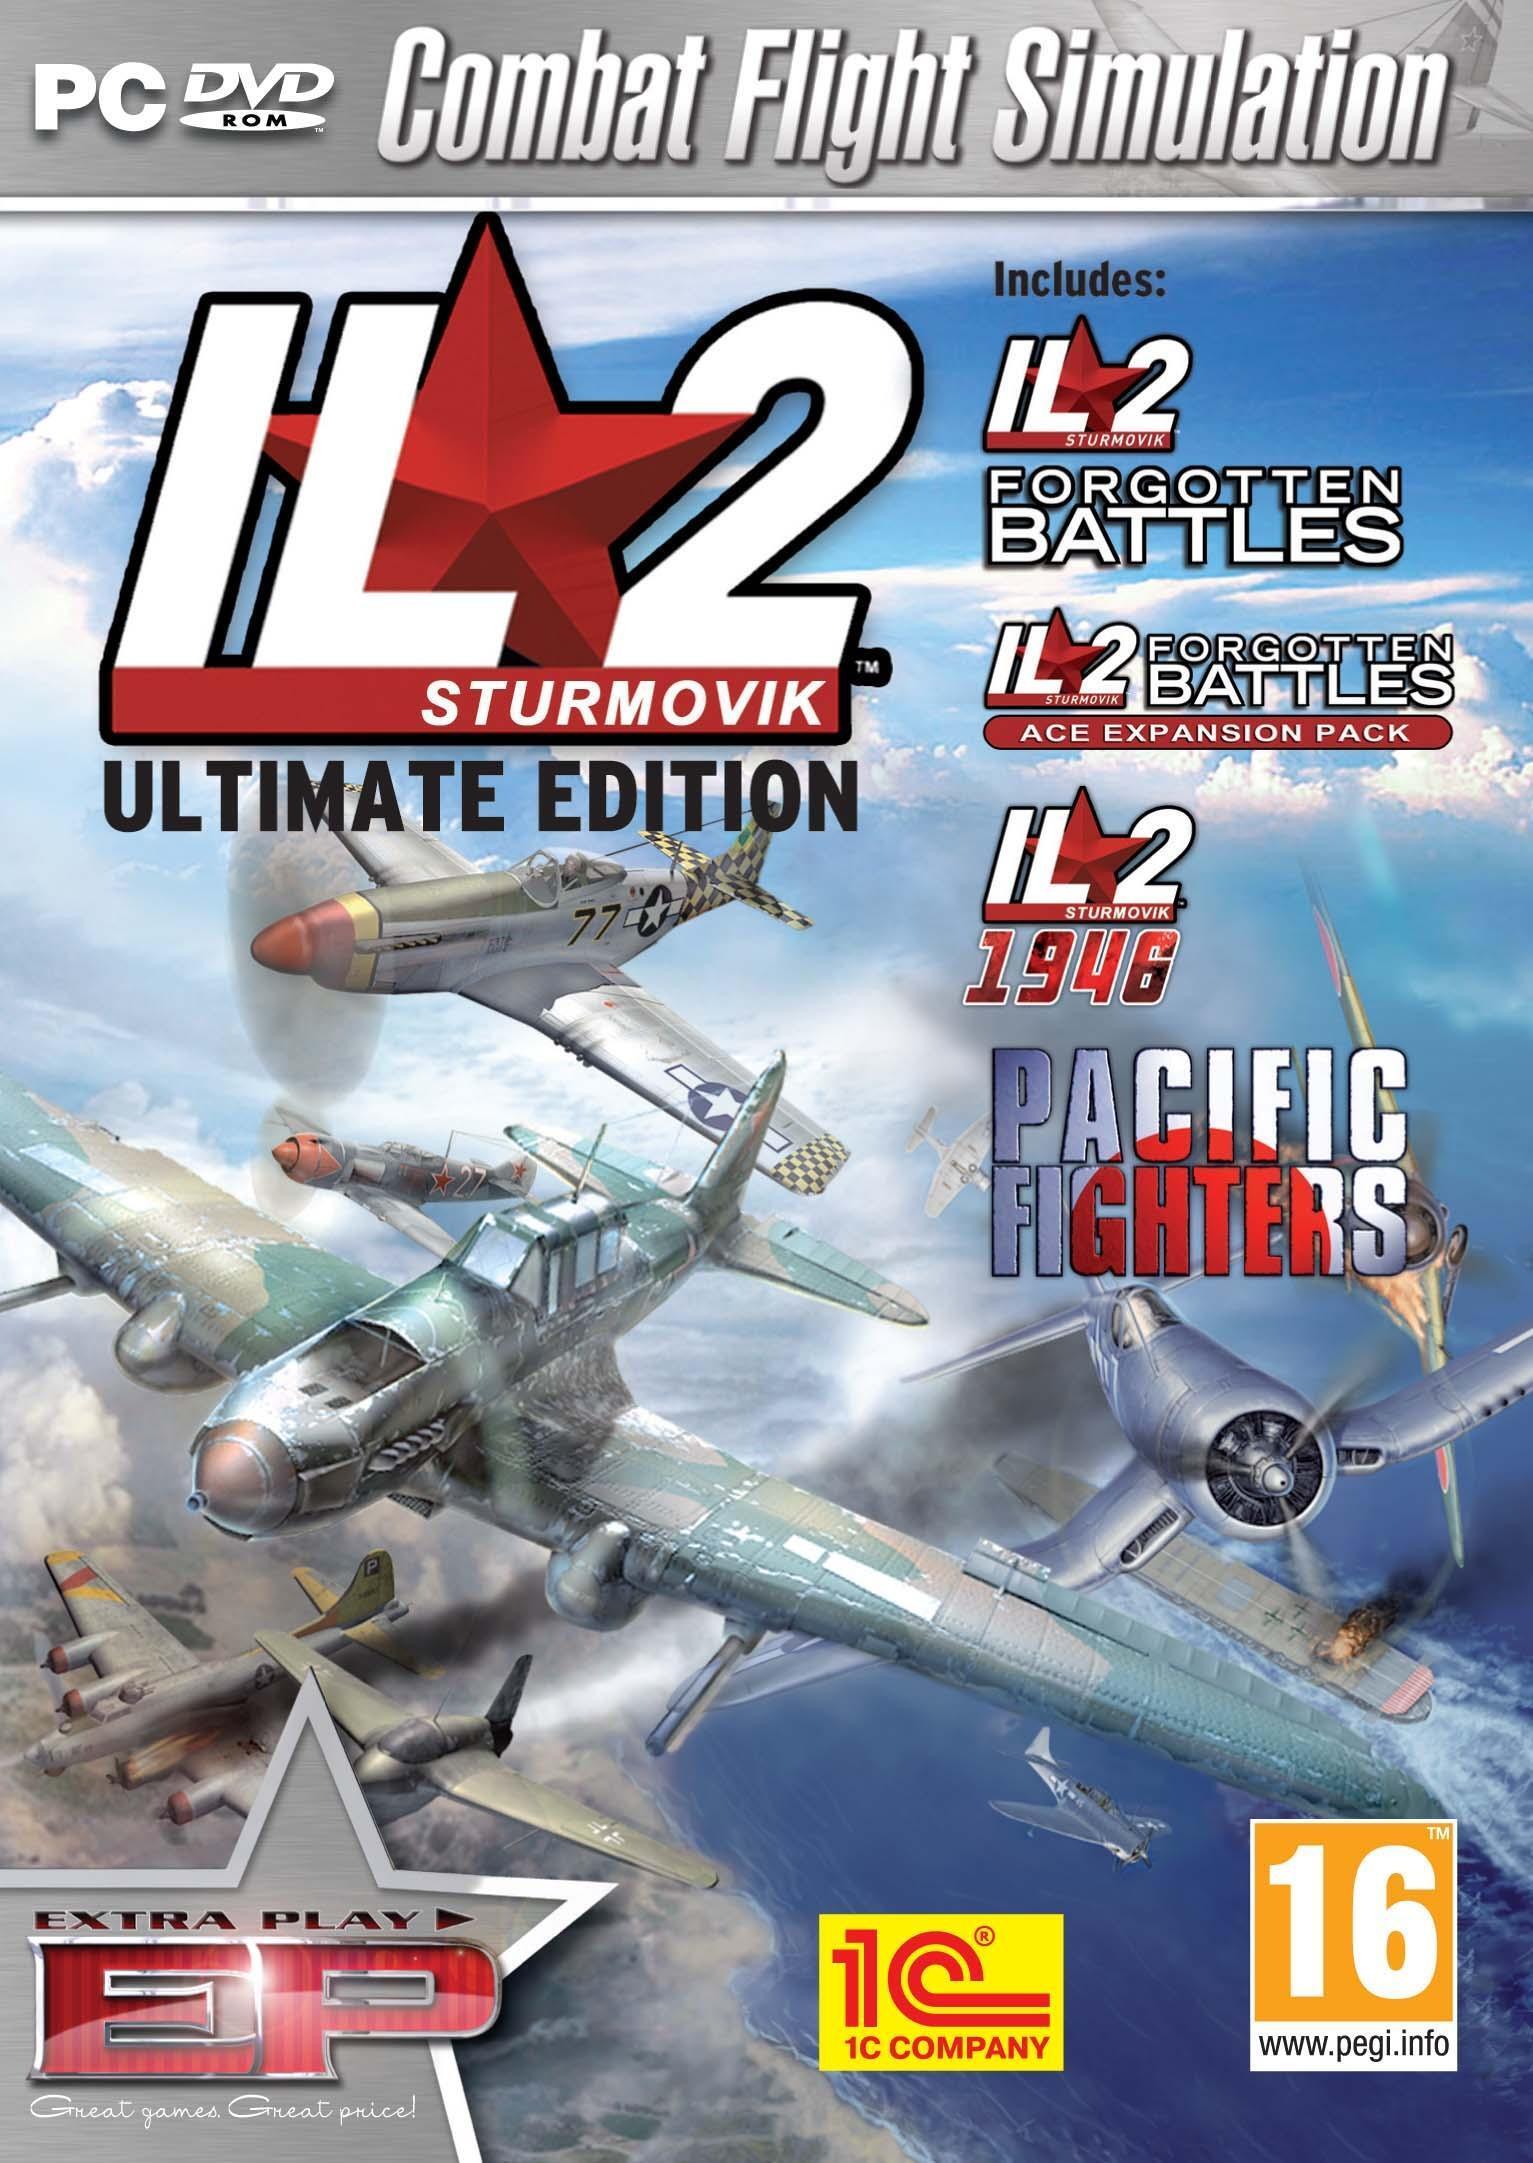 excalibur IL2 Sturmovik - Ultimate Edition PC